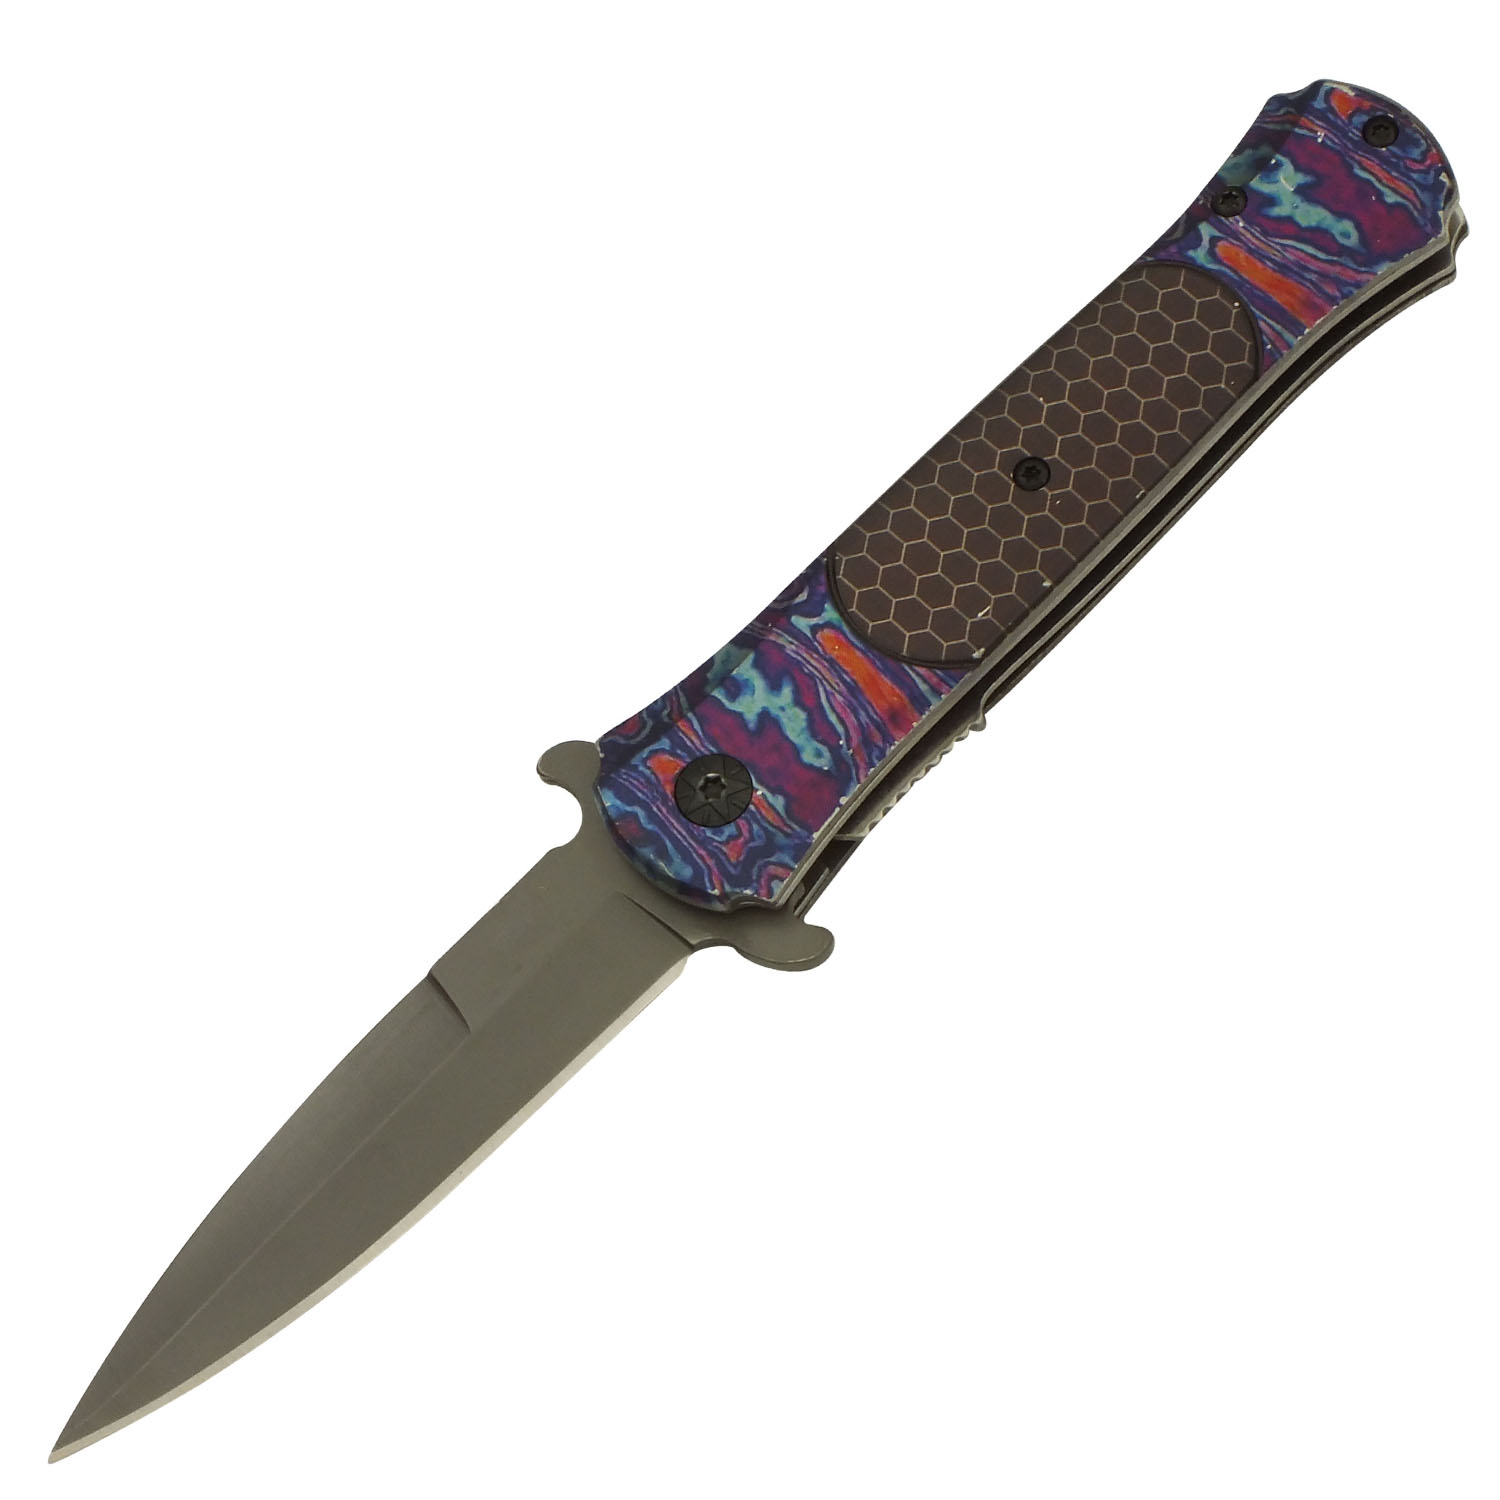 Violet Haze Spring Assisted Stiletto Folding Pocket Knife